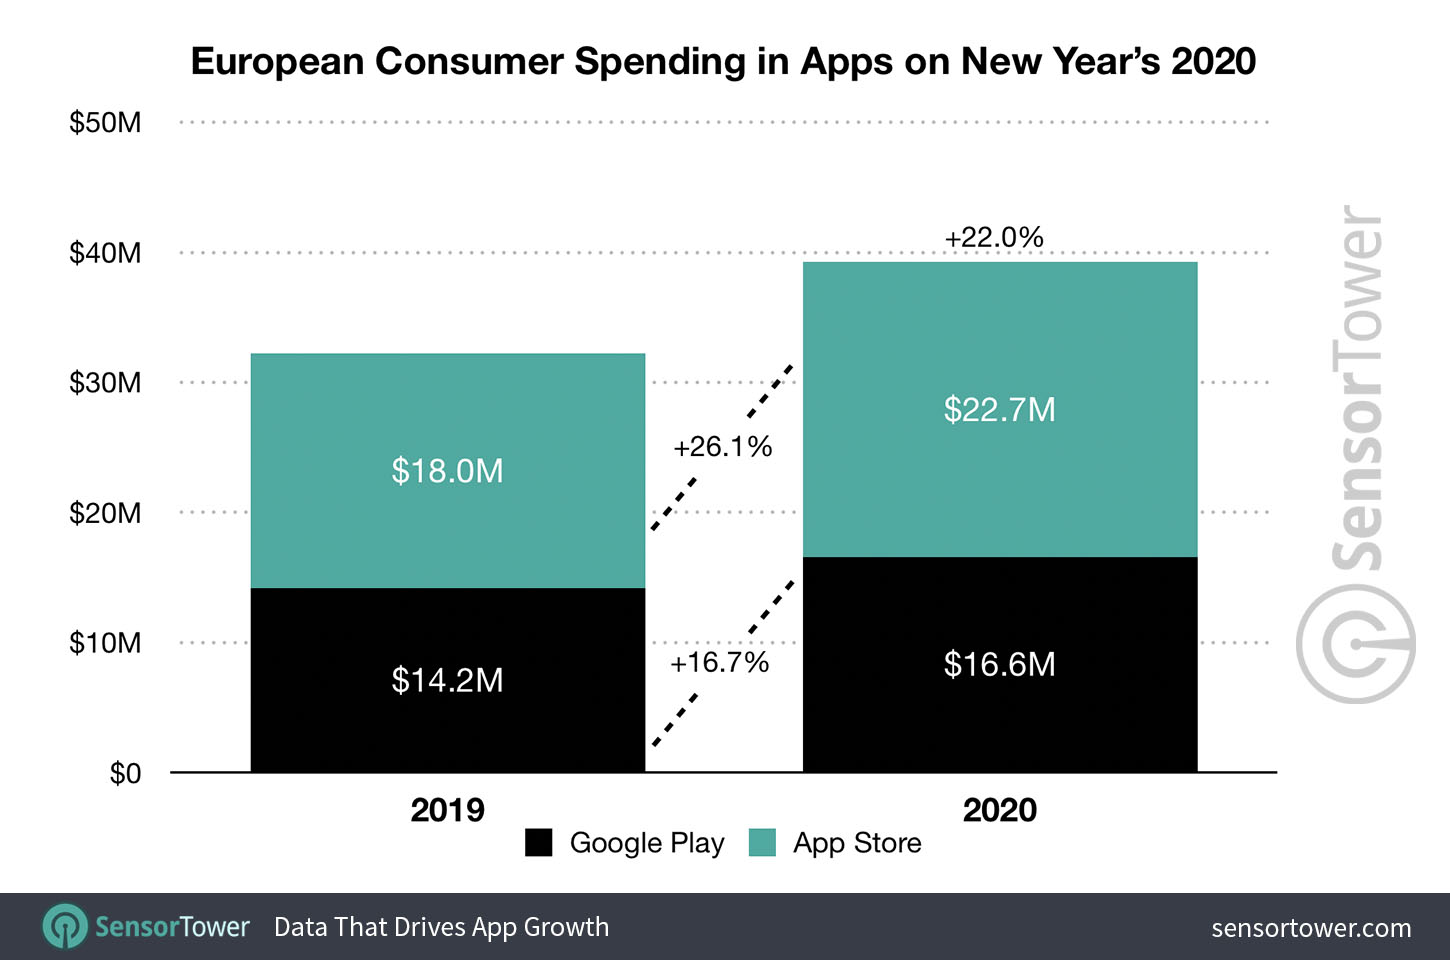 European consumer spending in apps on New Year’s 2020